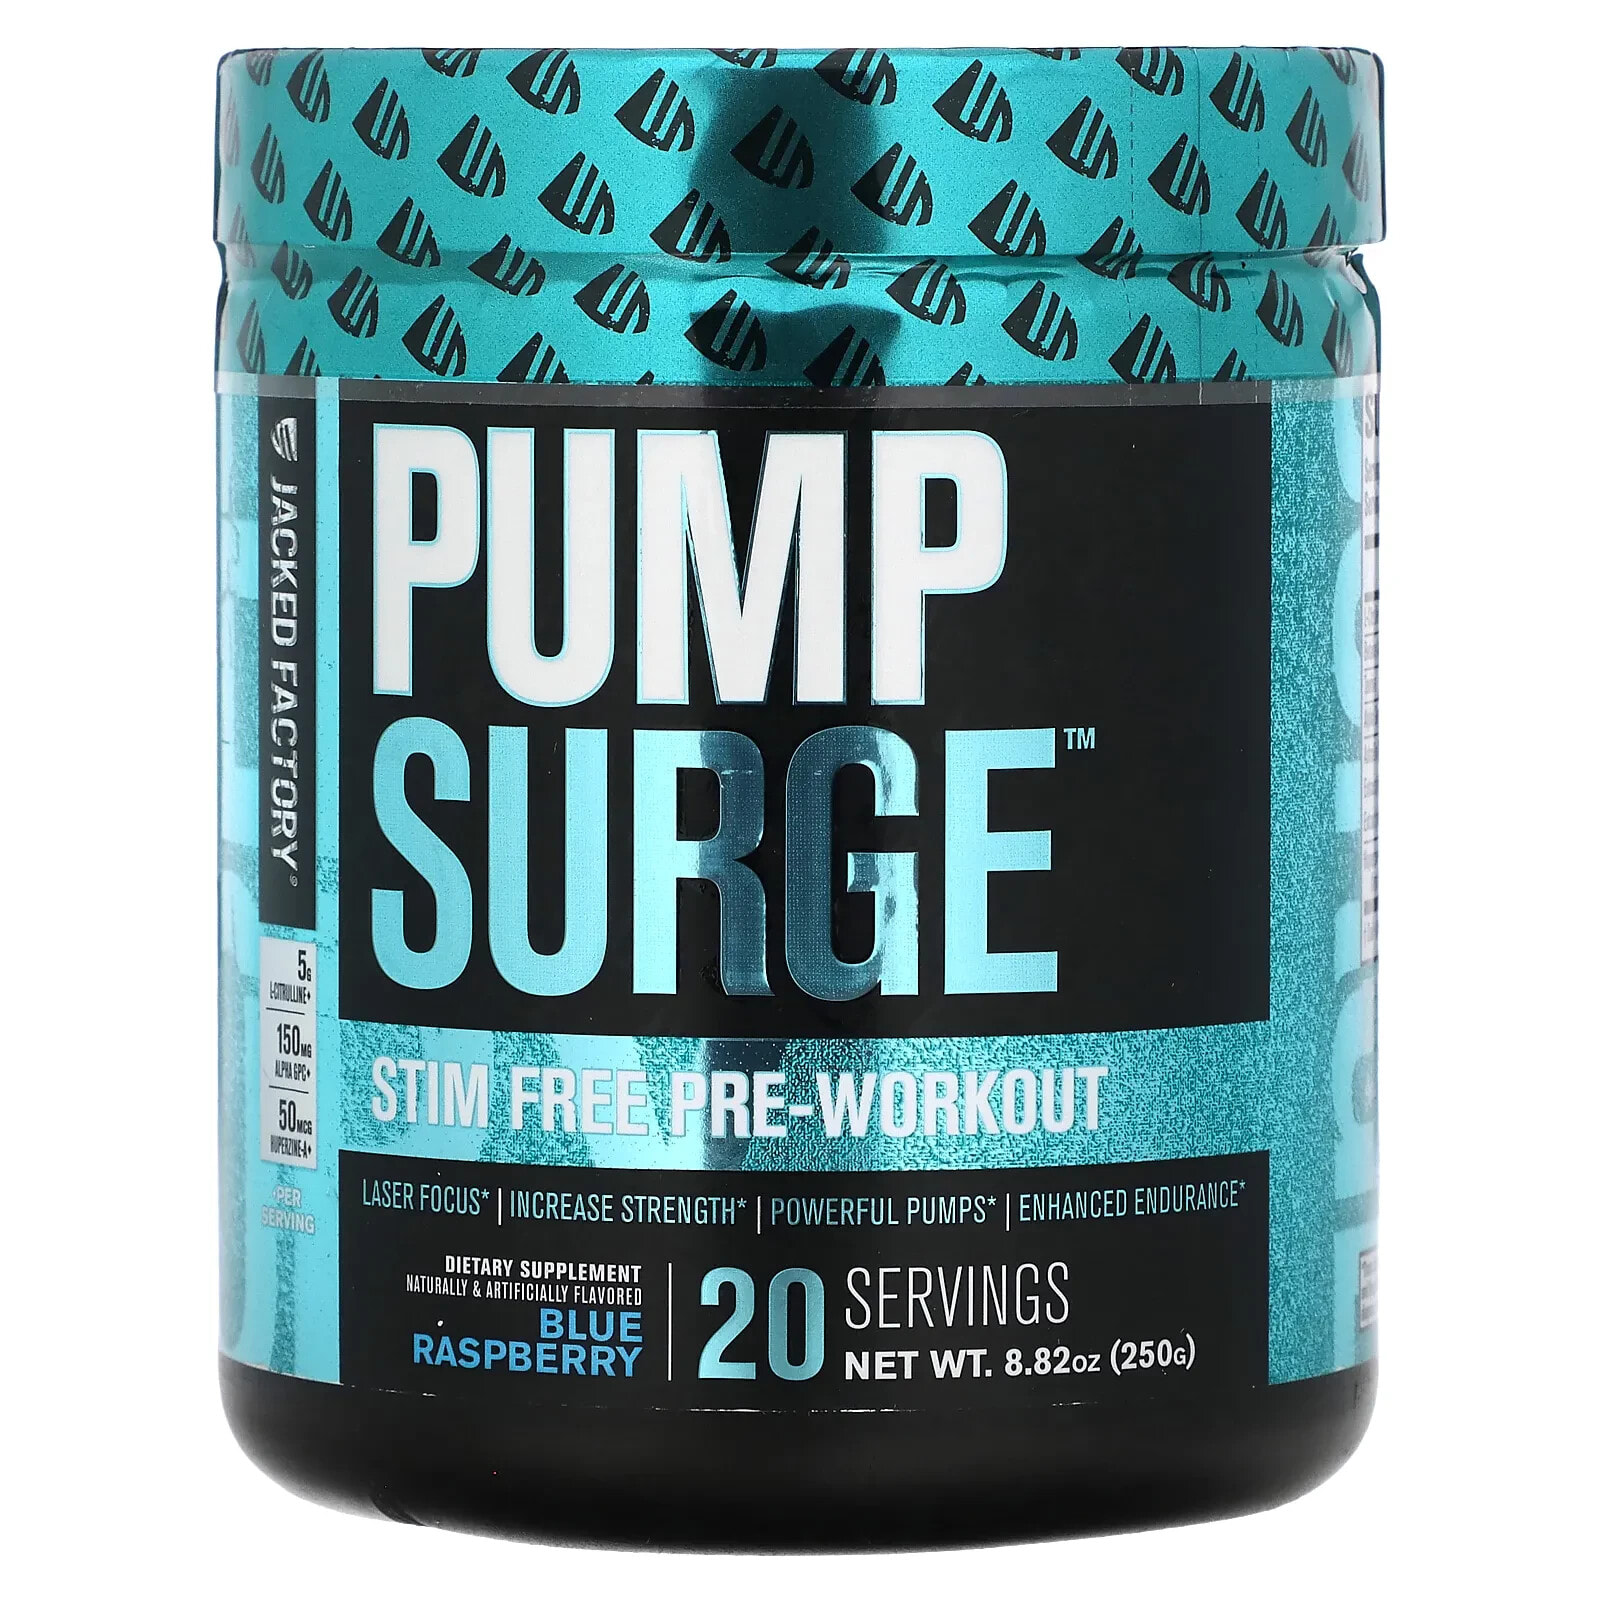 Pump Surge, Stim Free Pre-Workout, Cherry Limeade, 8.82 oz (250 g)